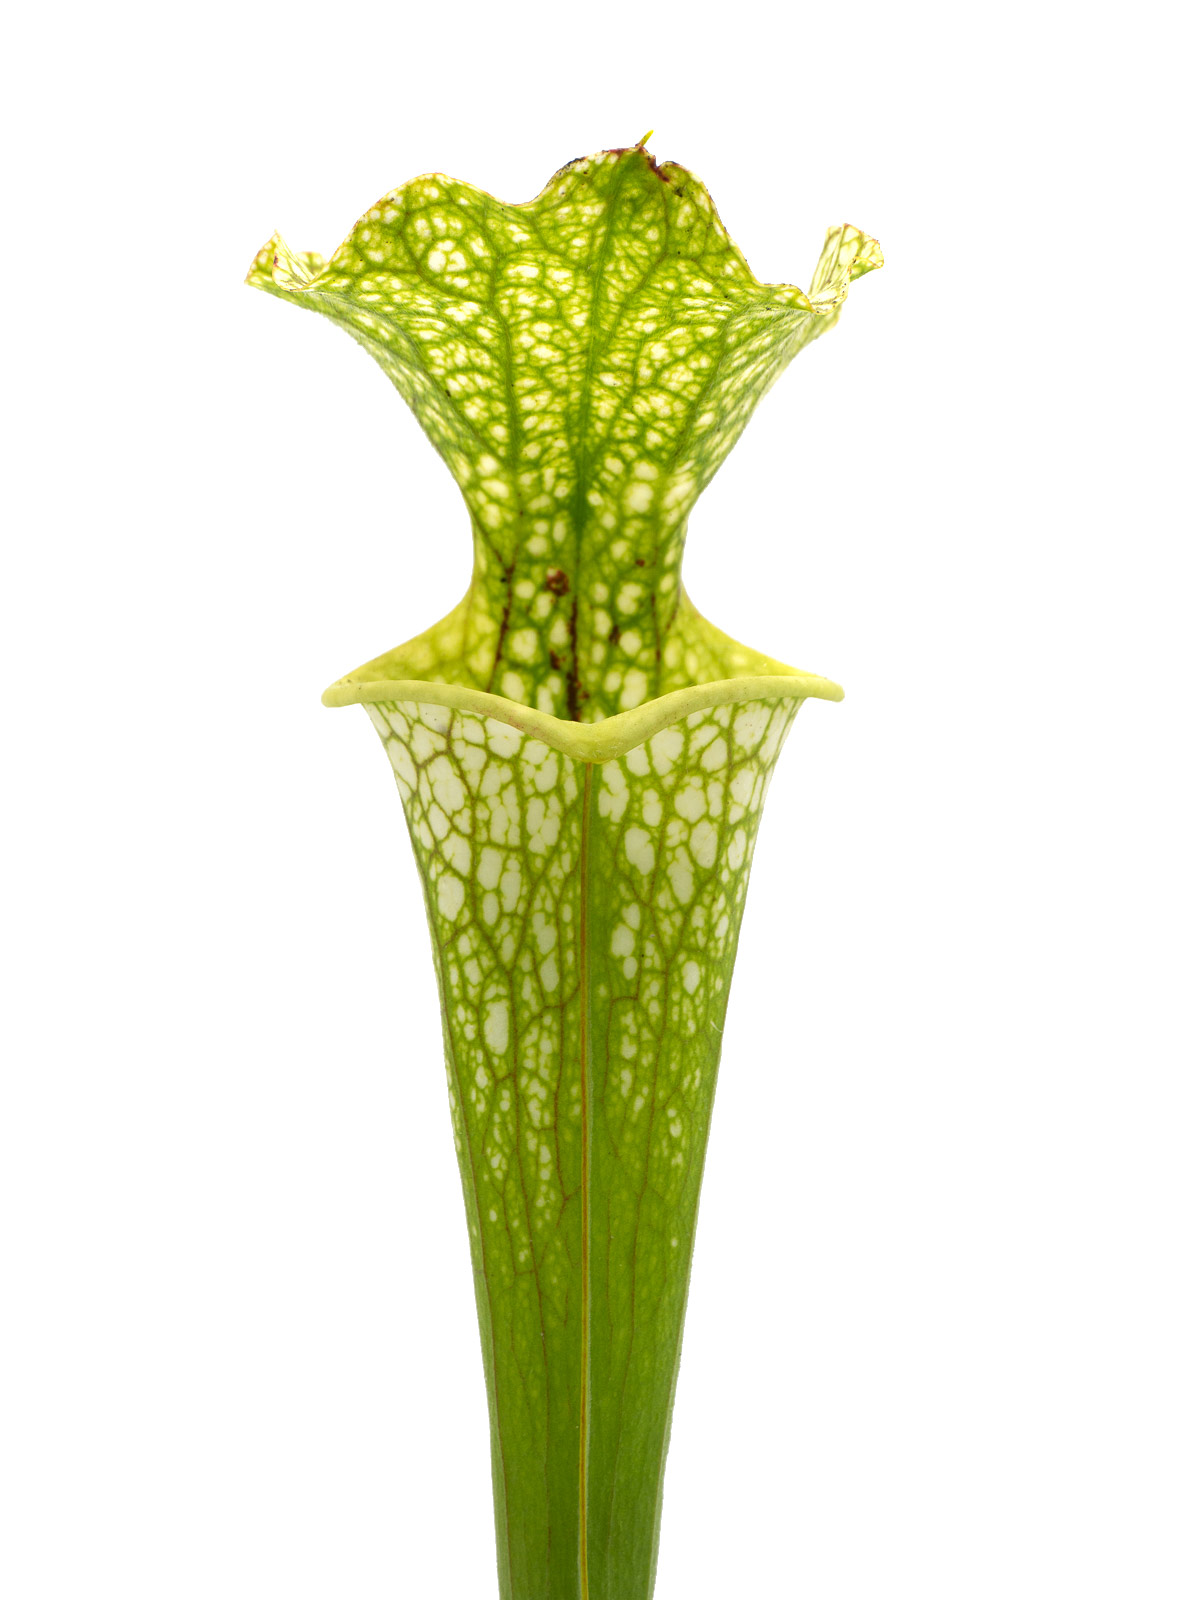 Sarracenia flava MK F18 x leucophylla MS L20C - Mirek Srba